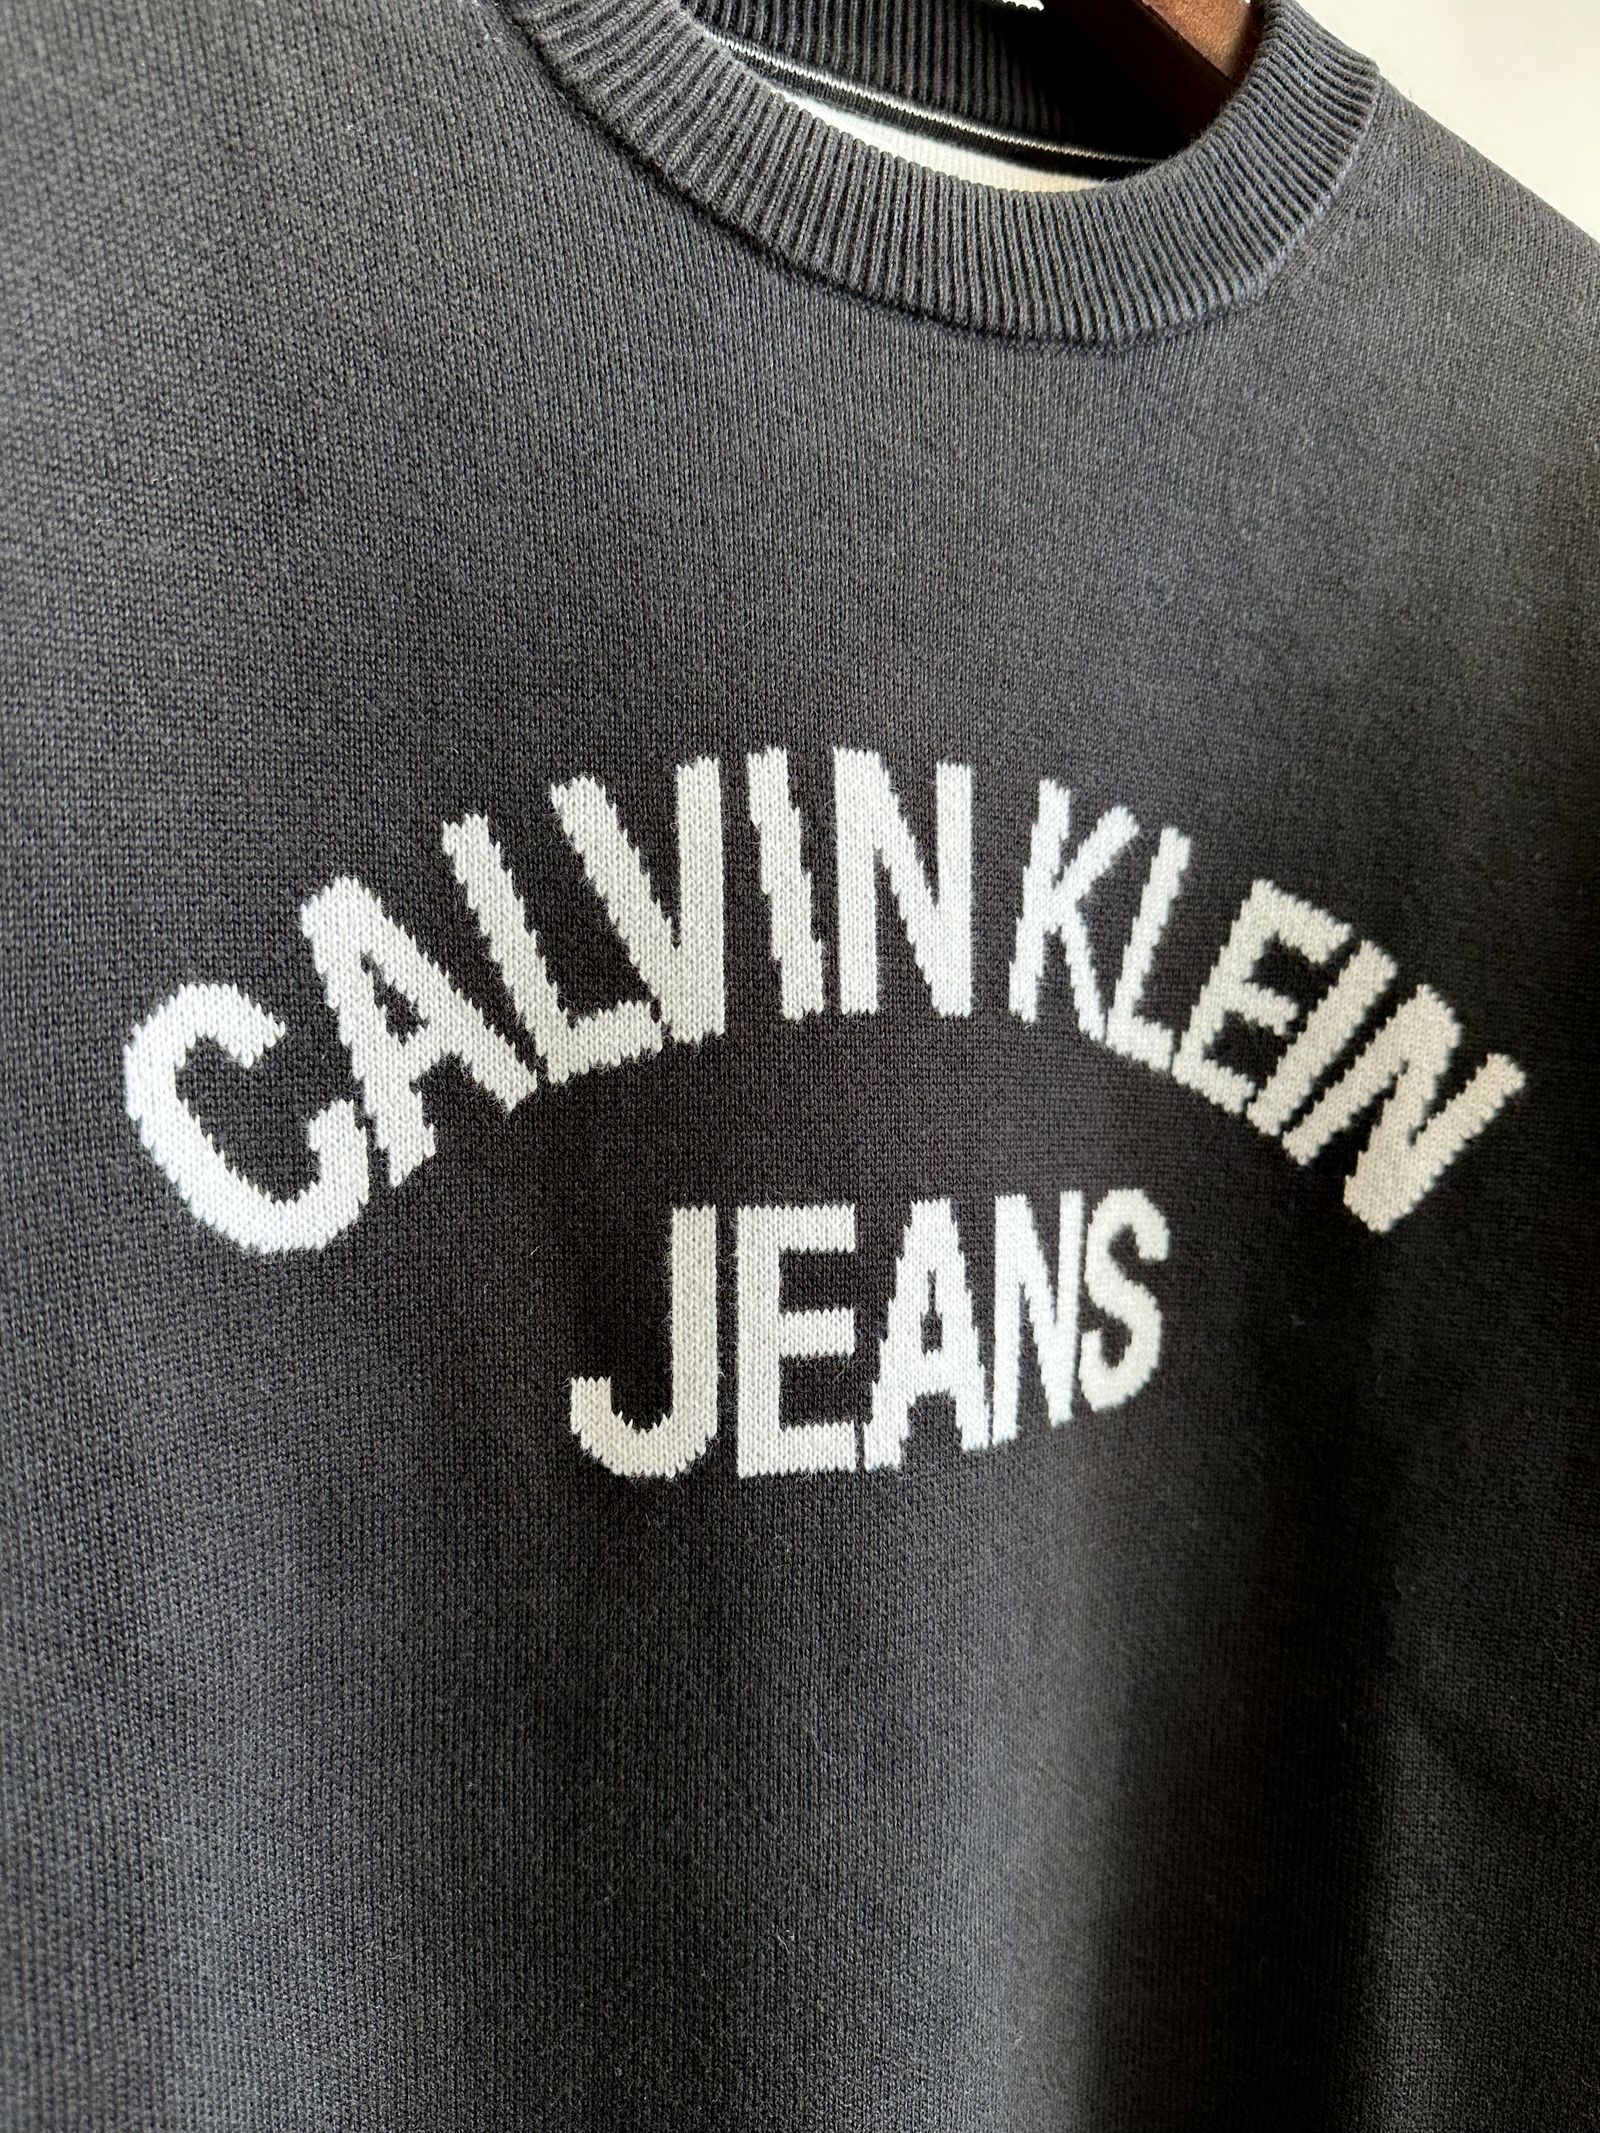 Calvin Klein - バーシティクルーネックセーター / J324493 / ブラック